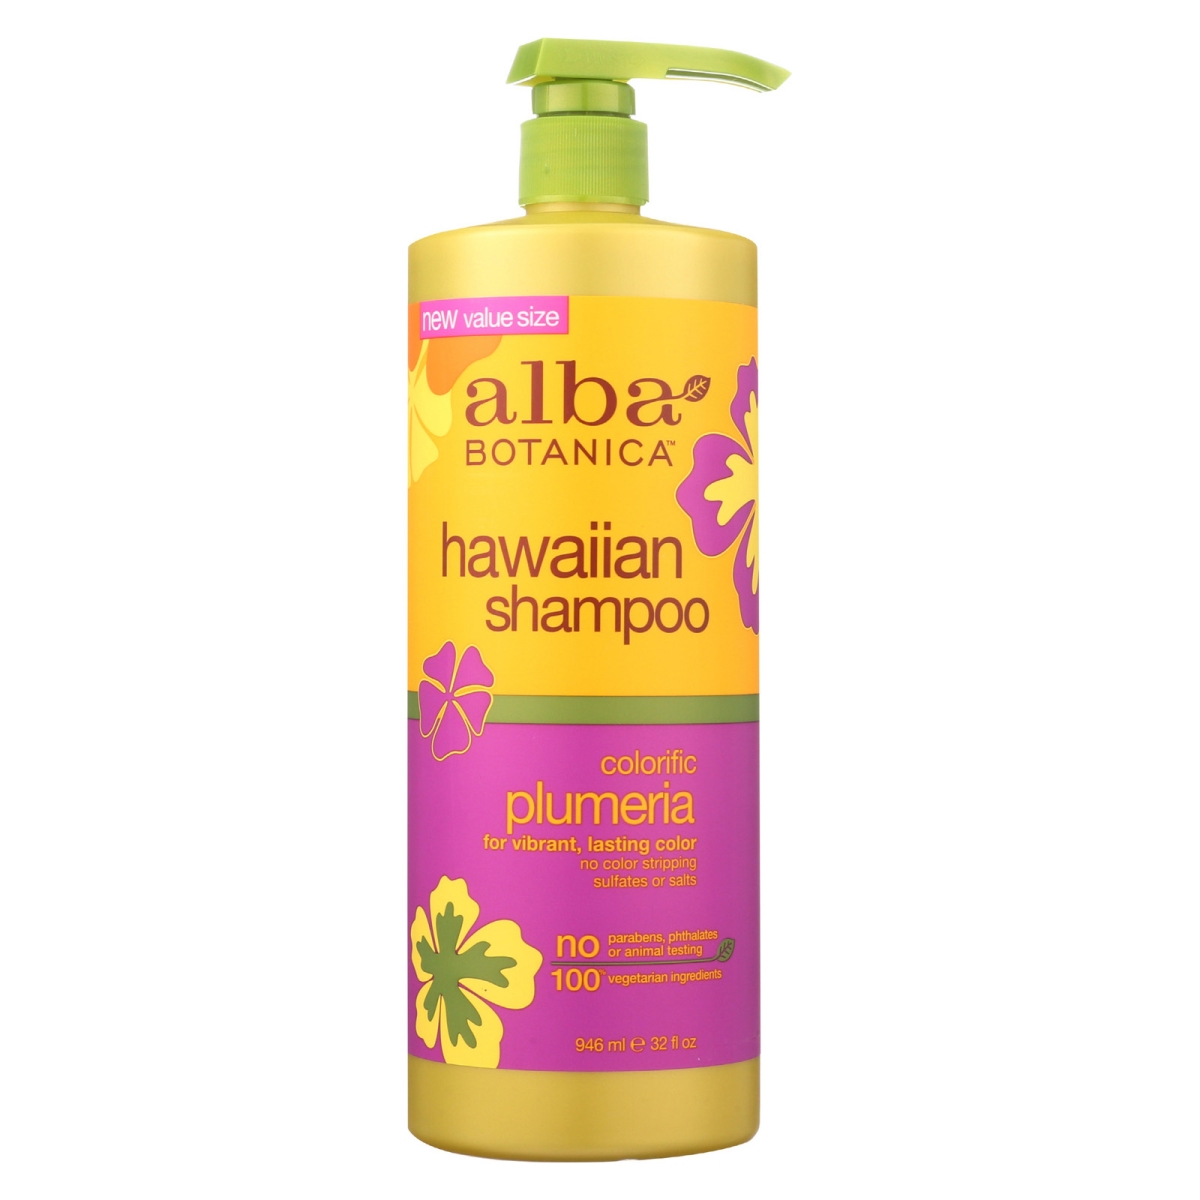 Picture of Alba Botanica 1924141 32 fl oz Colorific Plumeria Hawaiian Shampoo